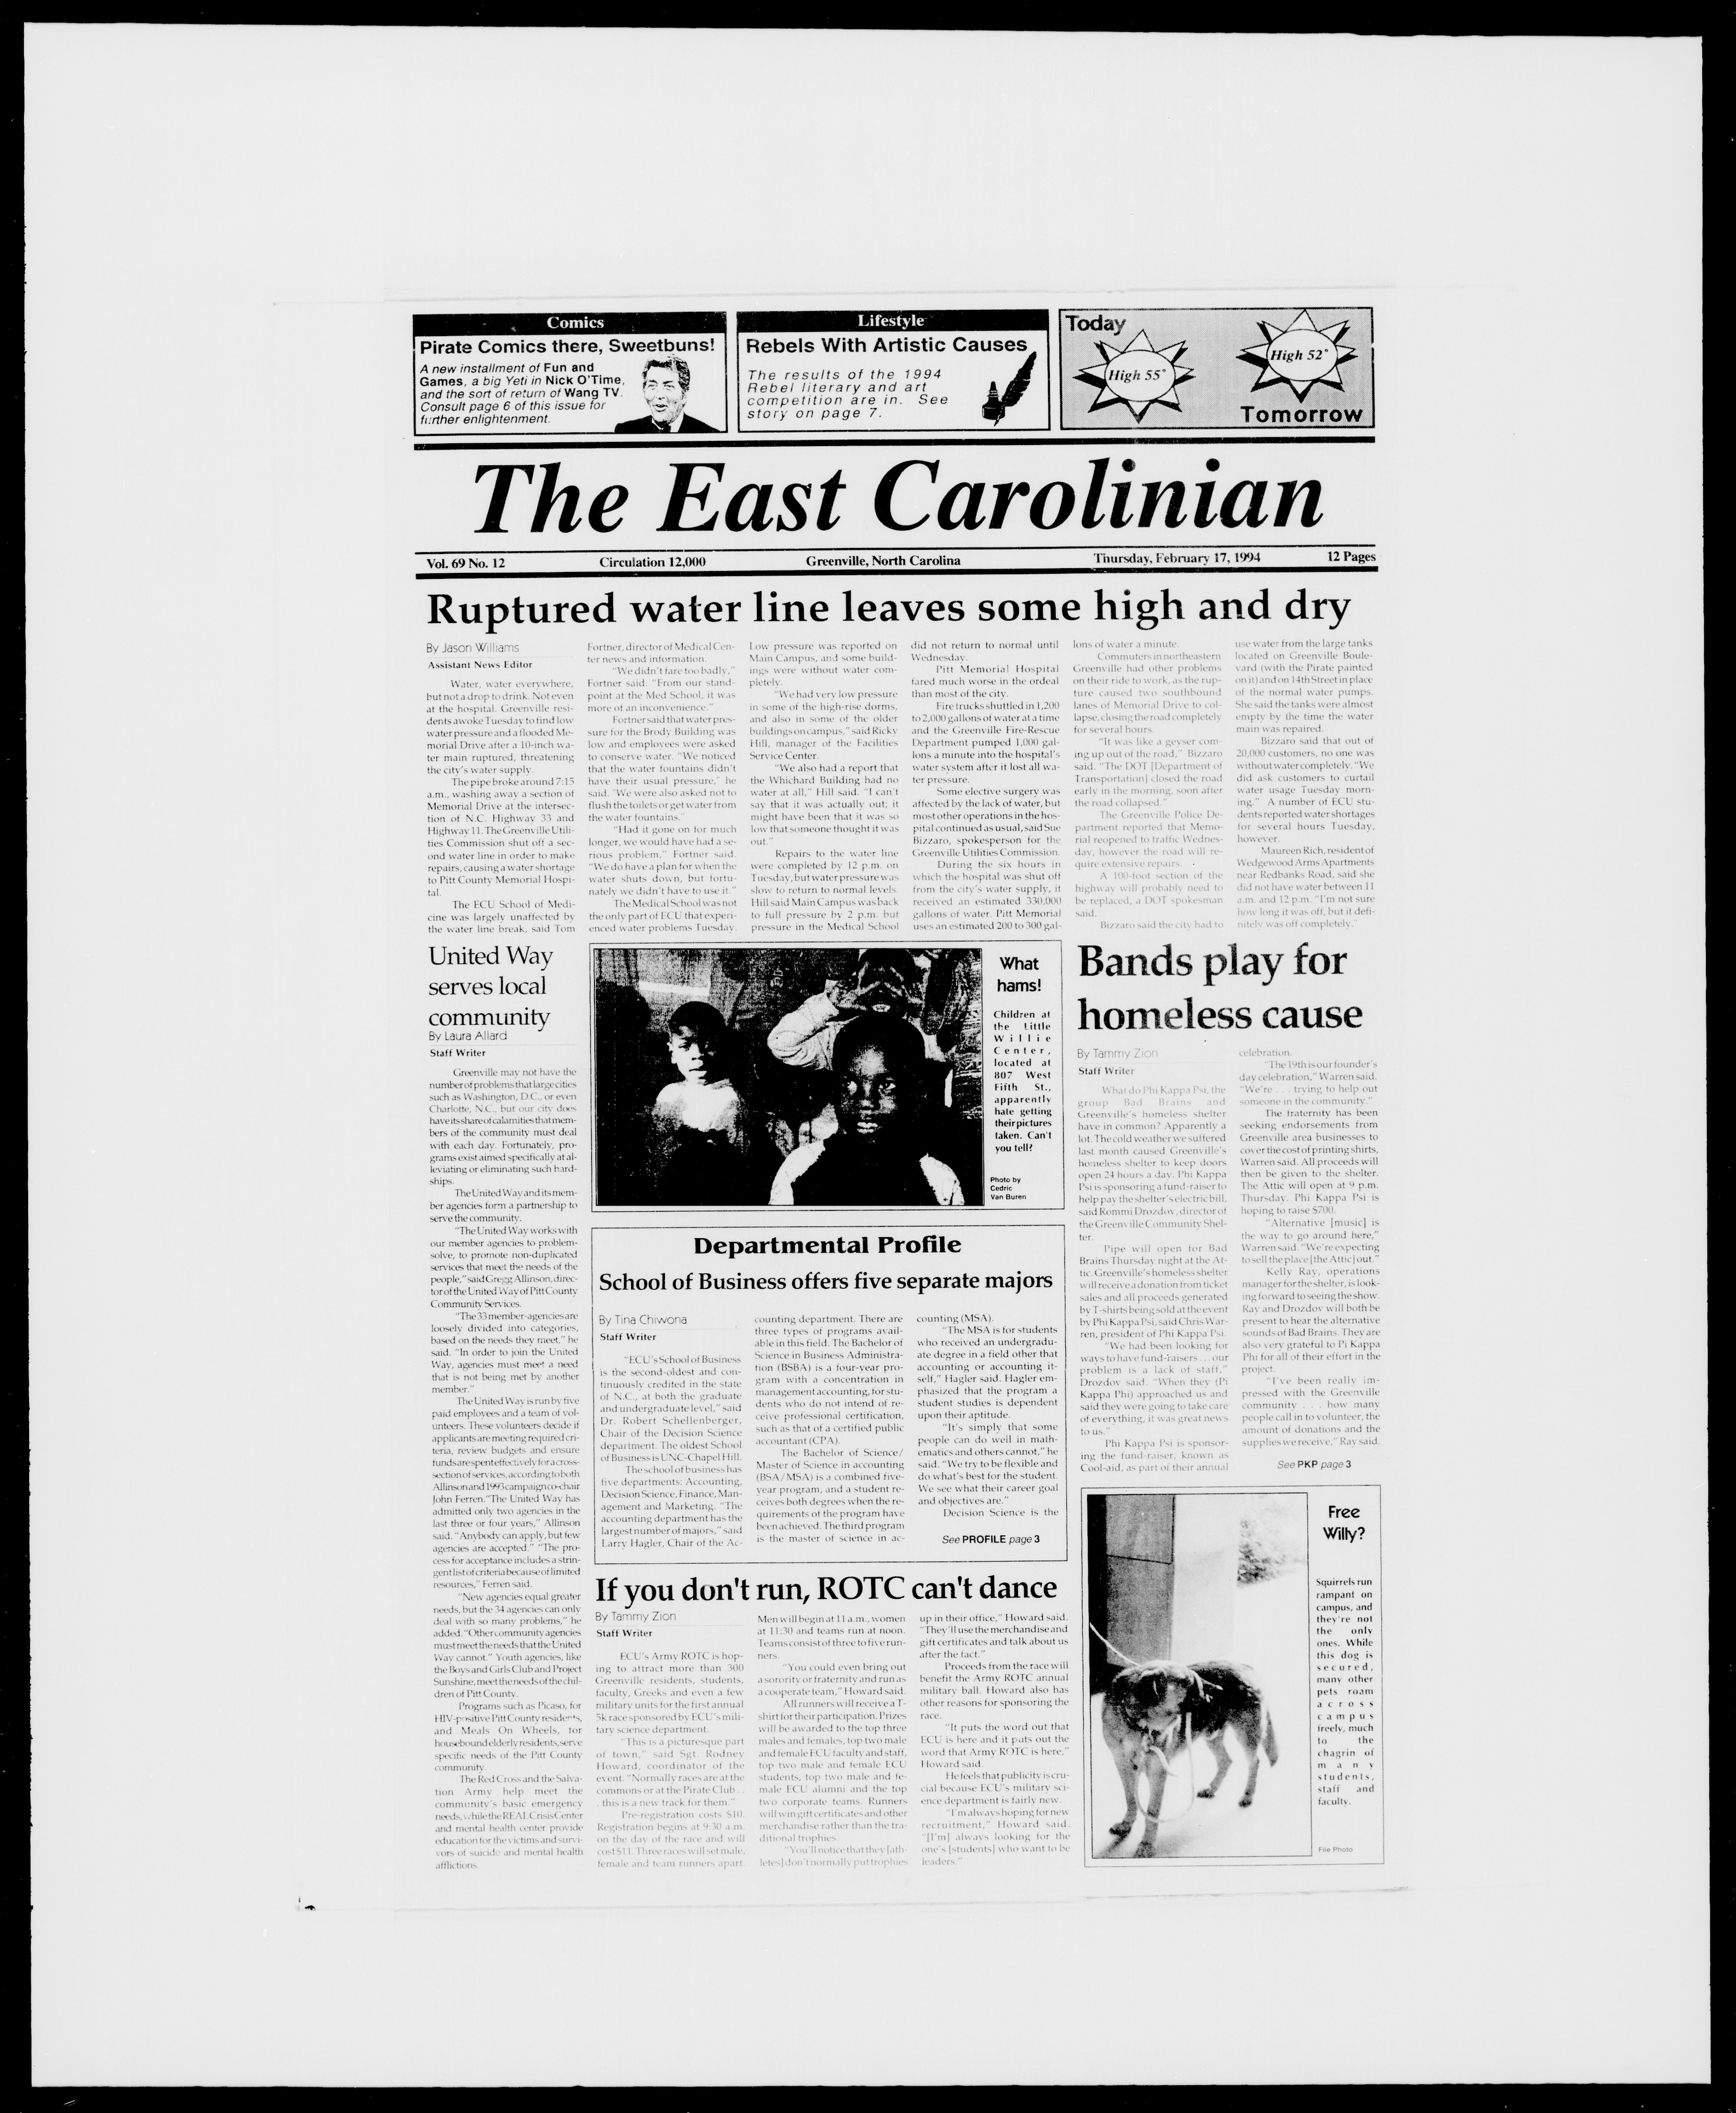 The East Carolinian, February 17, 1994